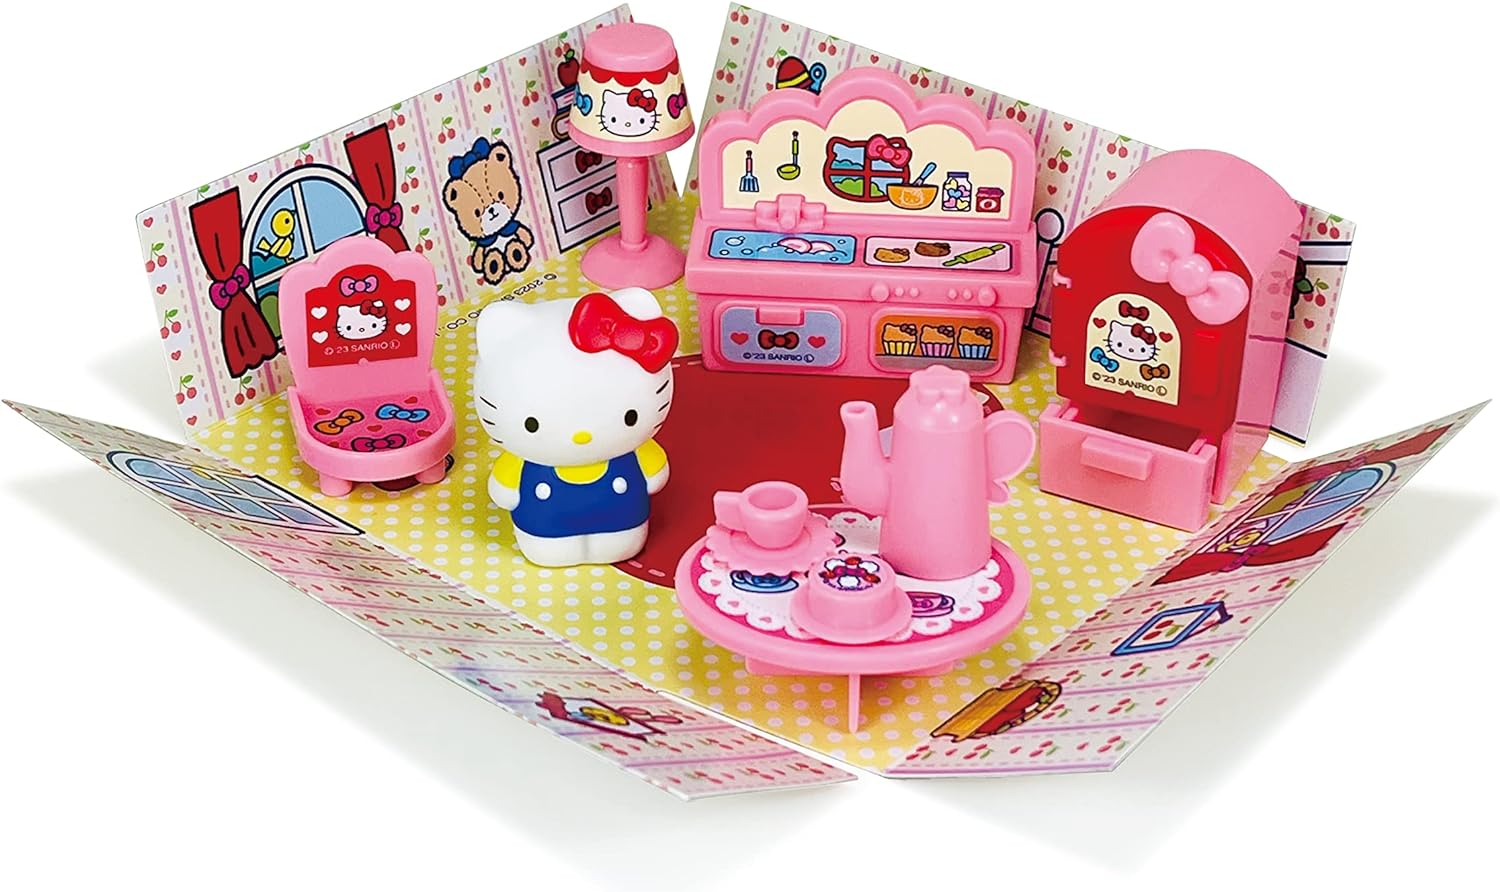 Sanrio Hello Kitty Petite Play House